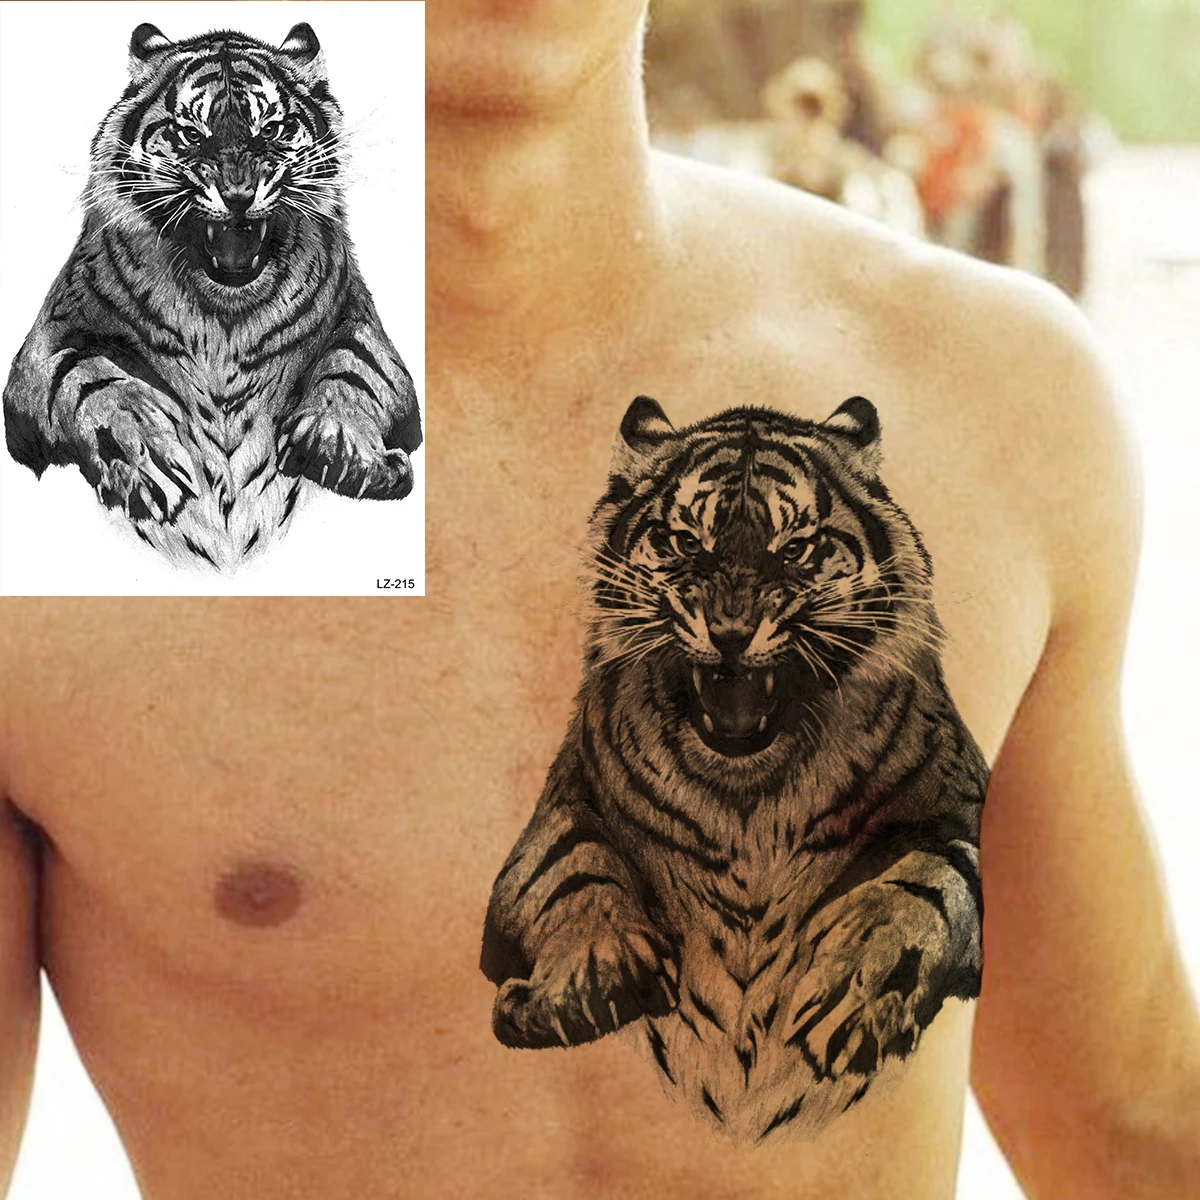 Spartan Warrior Temporary Tattoos For Men Boys Realistic Lion Wolf Tiger  Compass Fake Tattoo Sticker Arm Chest Waterproof Tatoos - Temporary Tattoos  - AliExpress